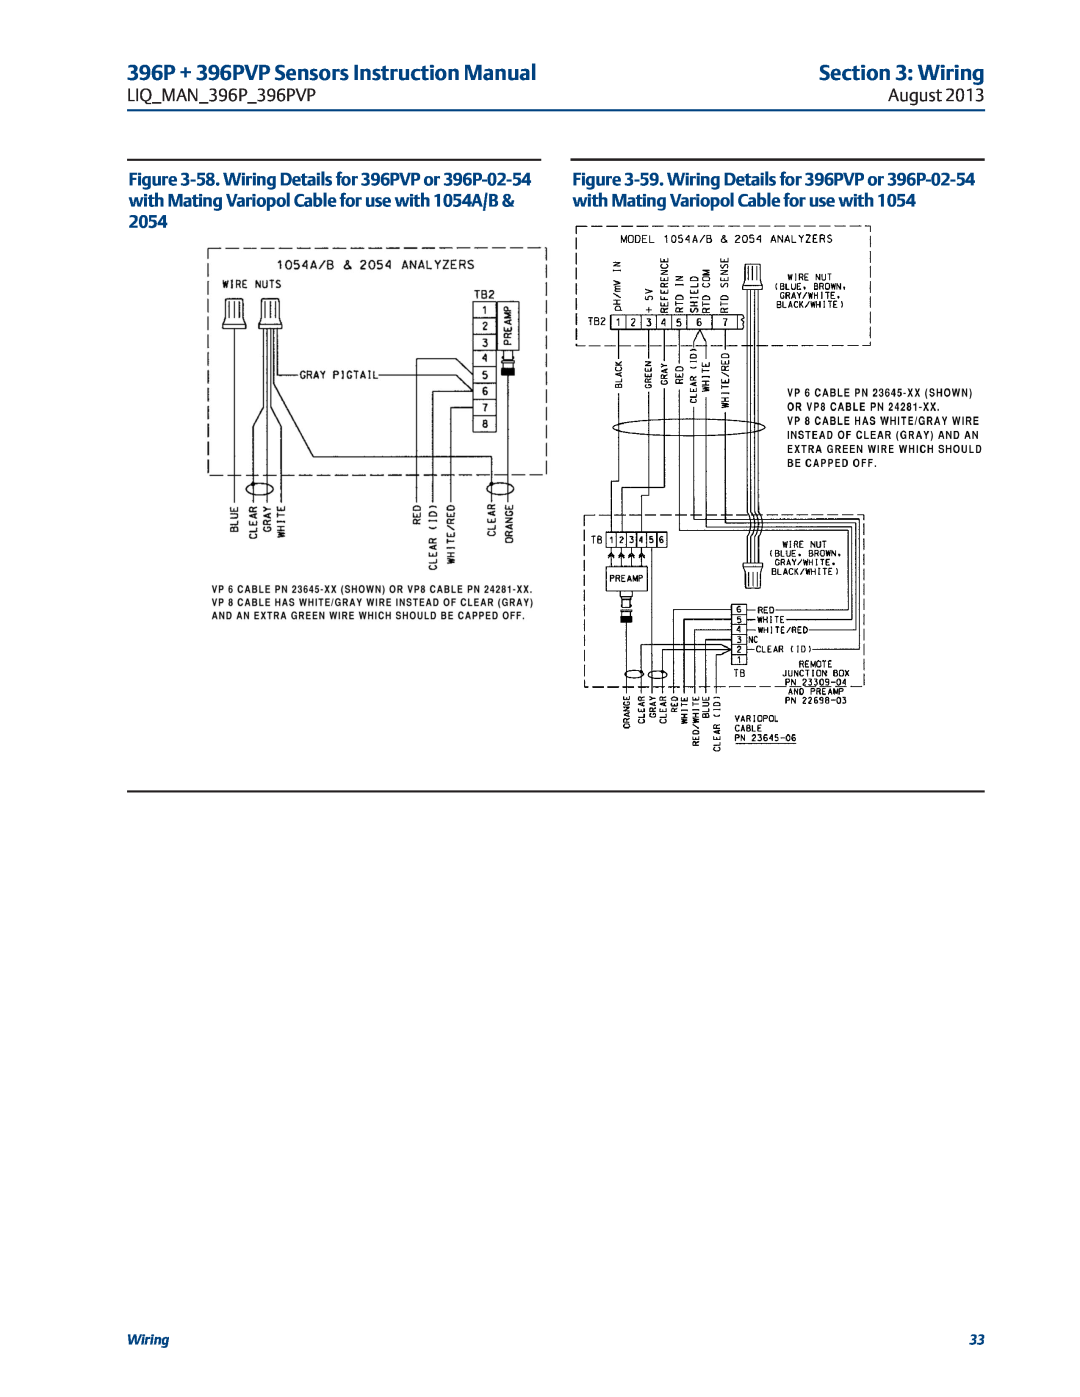 Emerson instruction manual 396P + 396PVP Sensors Instruction Manual, Wiring 